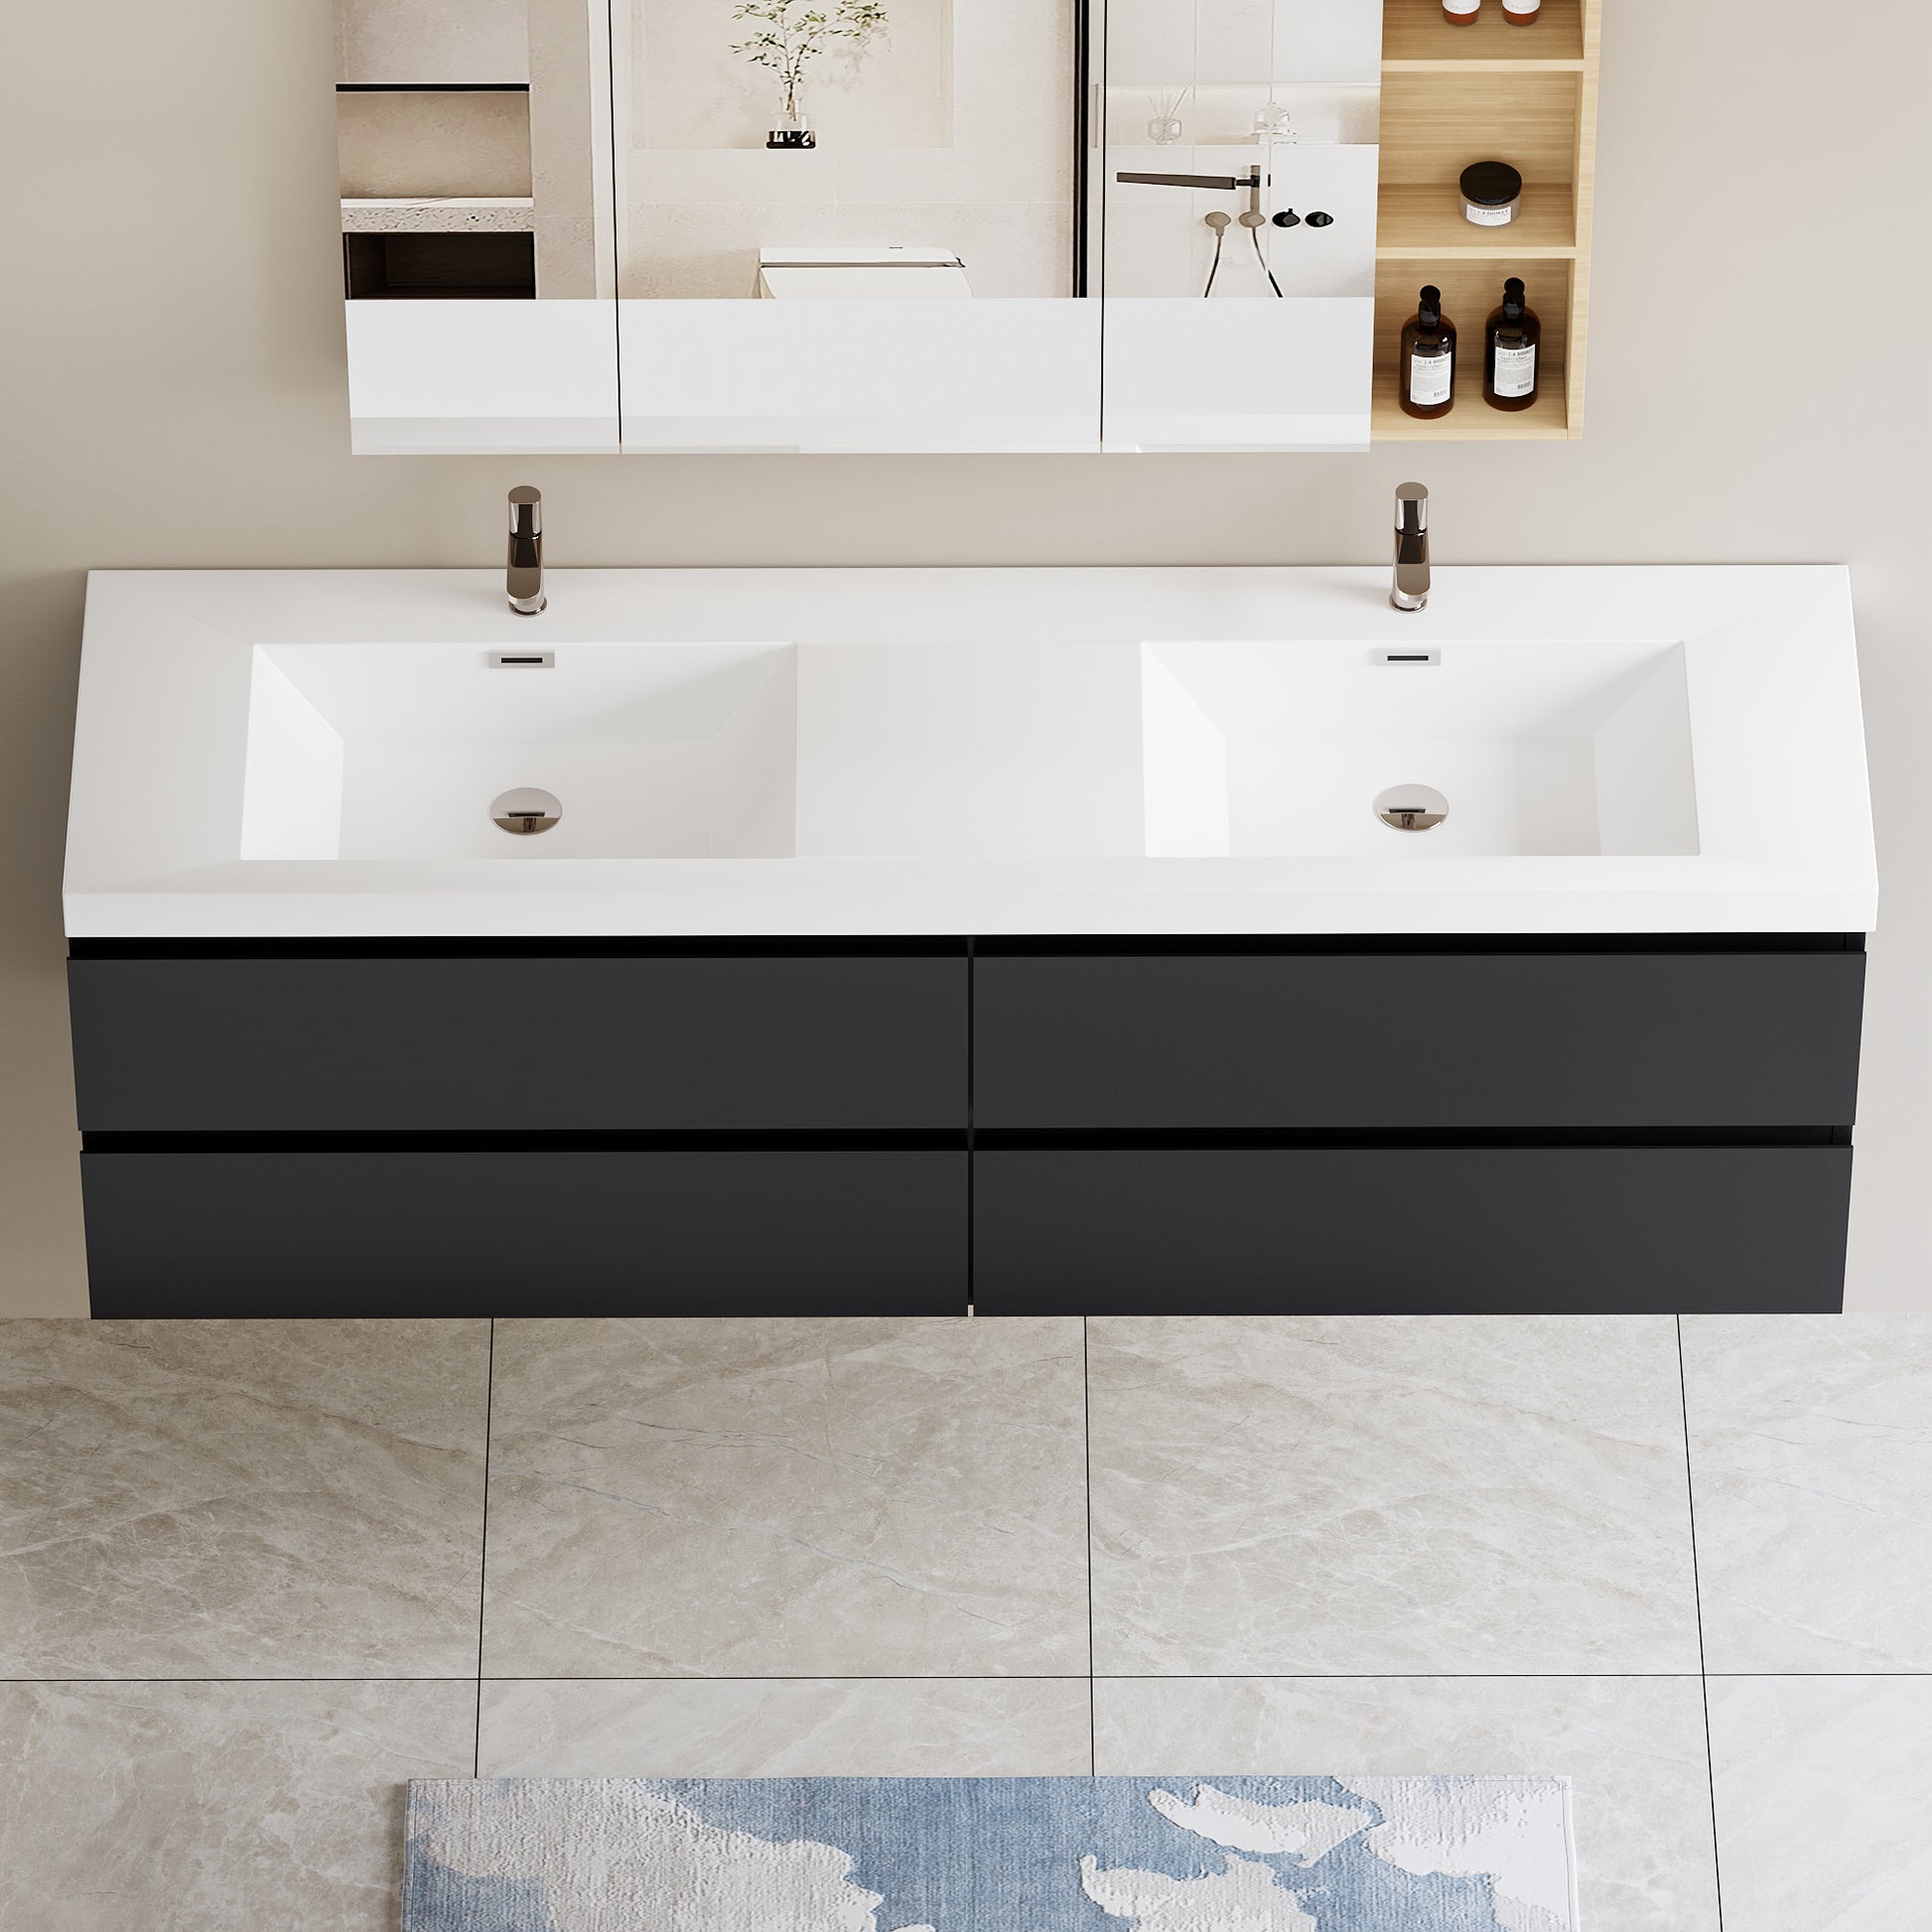 72" Floating Bathroom Vanity with Sink, Modern Wall 4+-black-bathroom-wall mounted-mdf